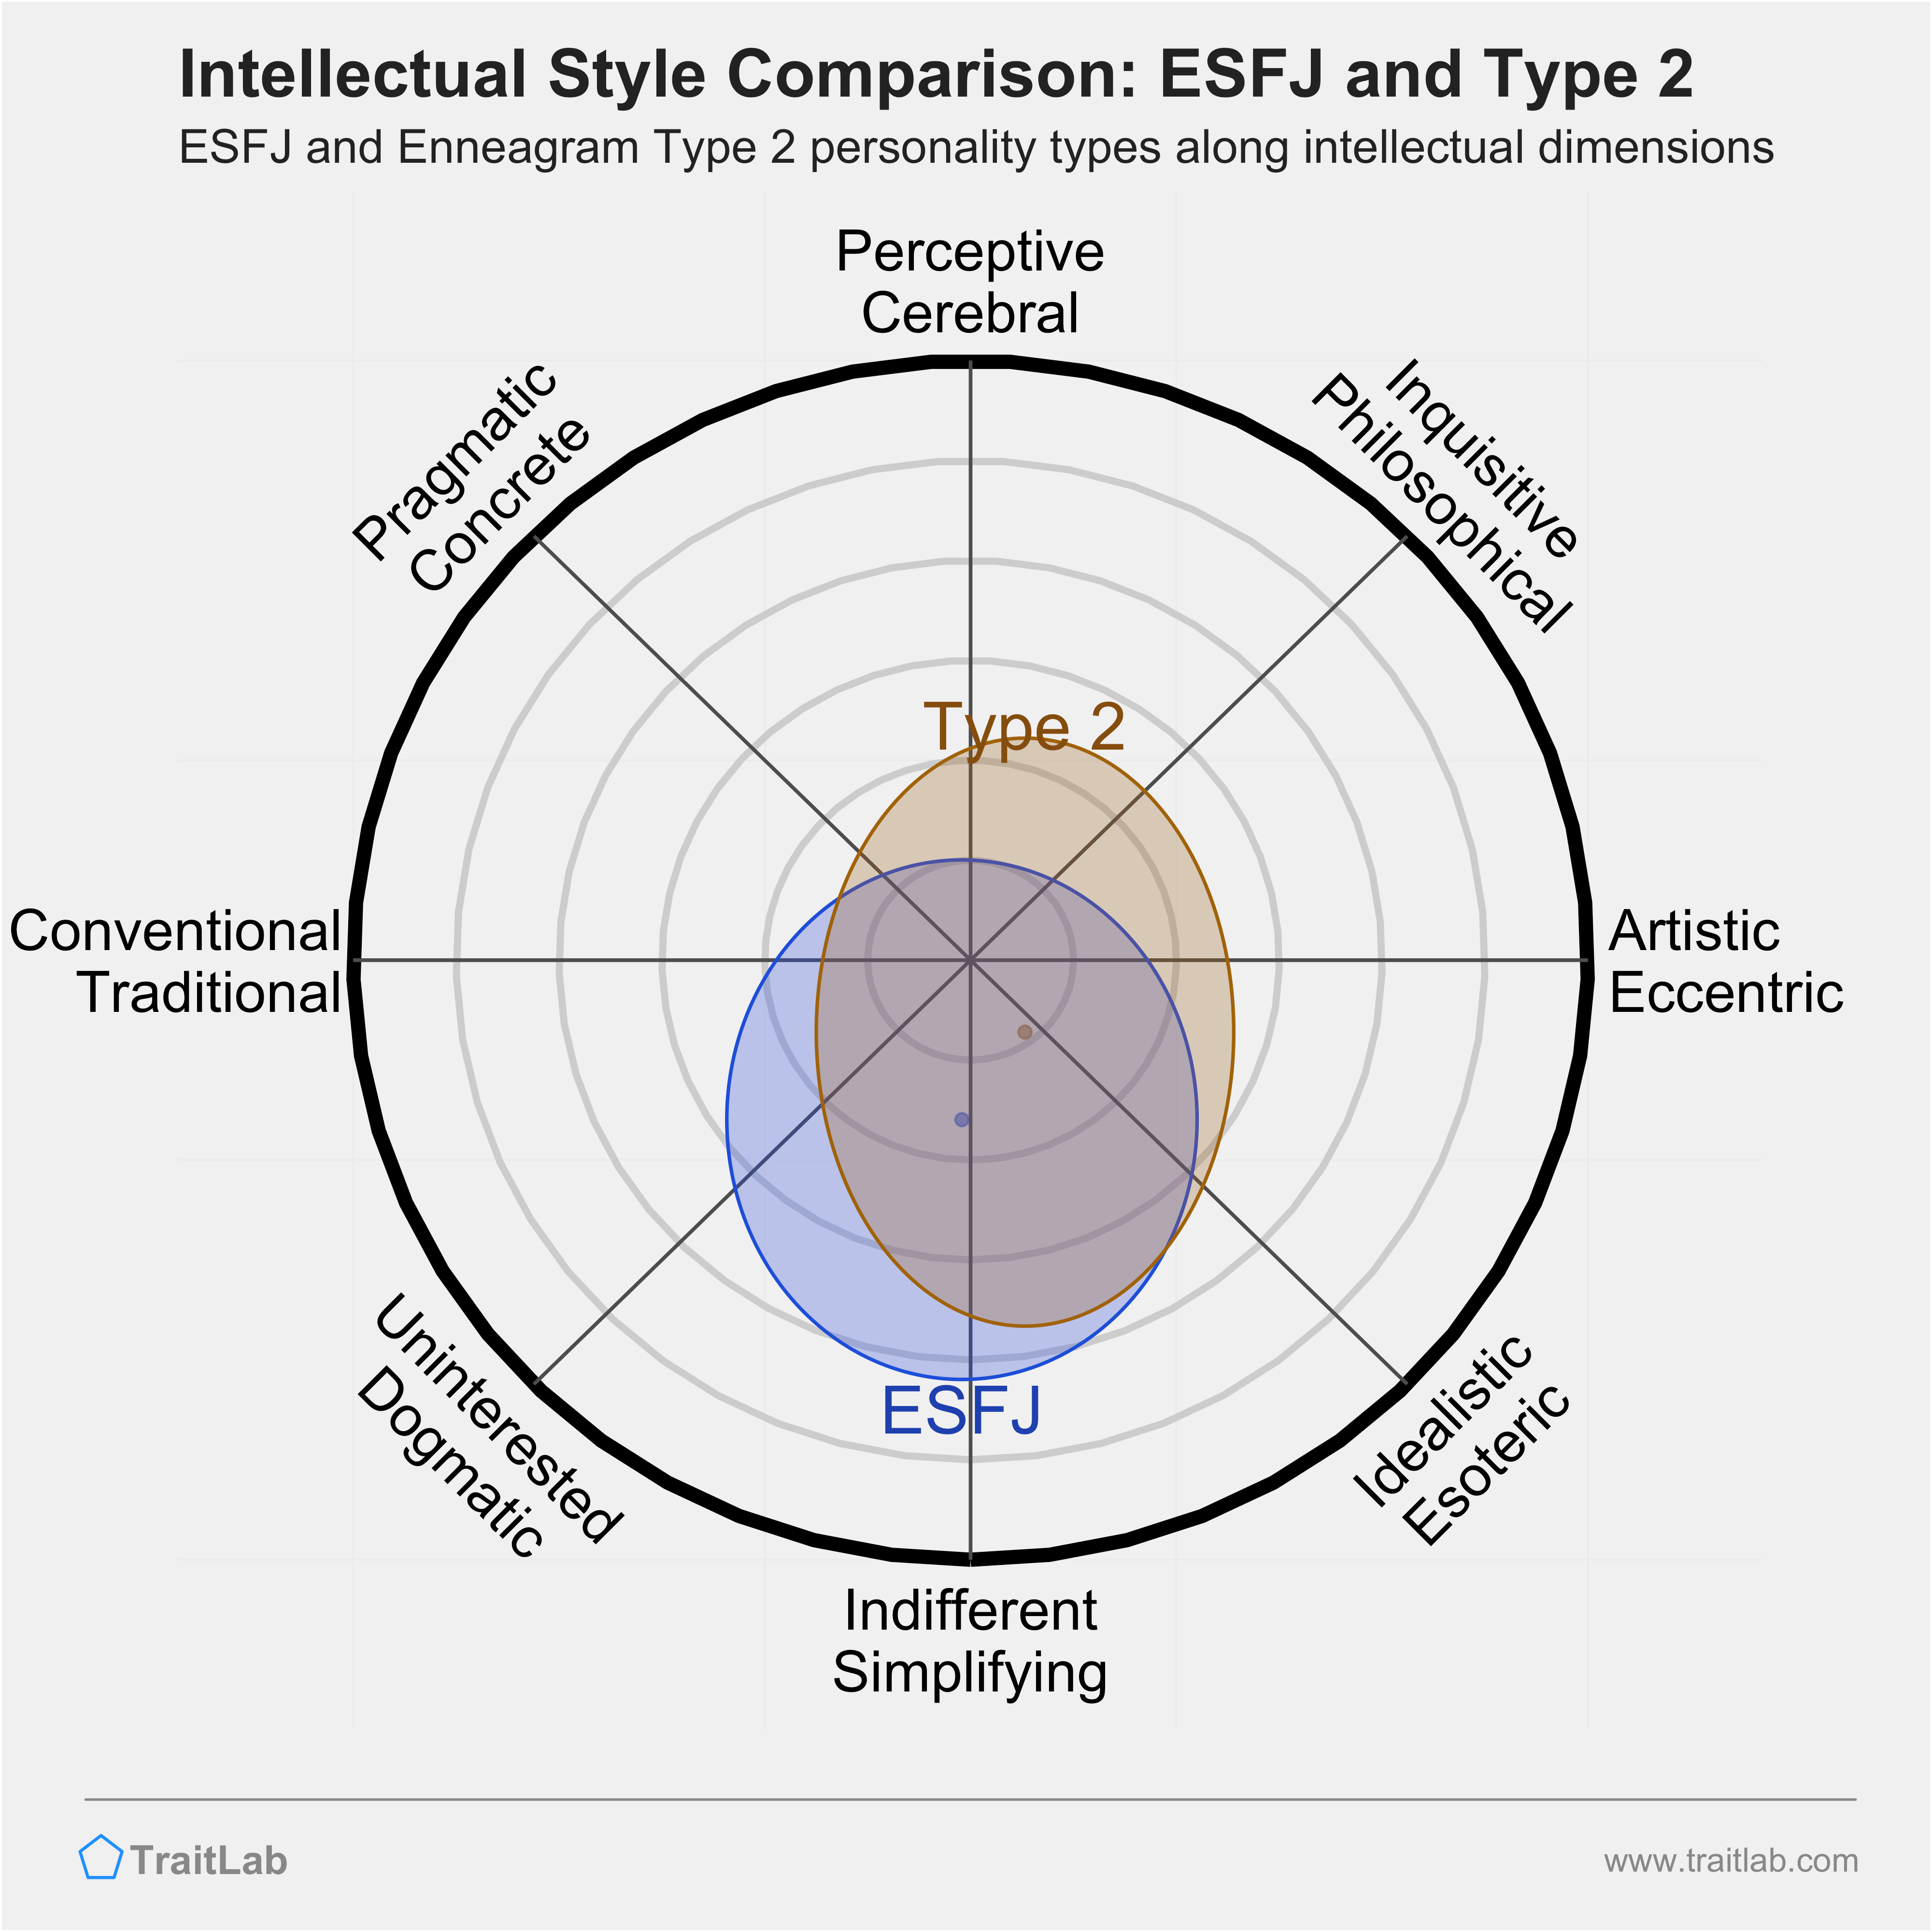 ESFJ and Type 2 comparison across intellectual dimensions